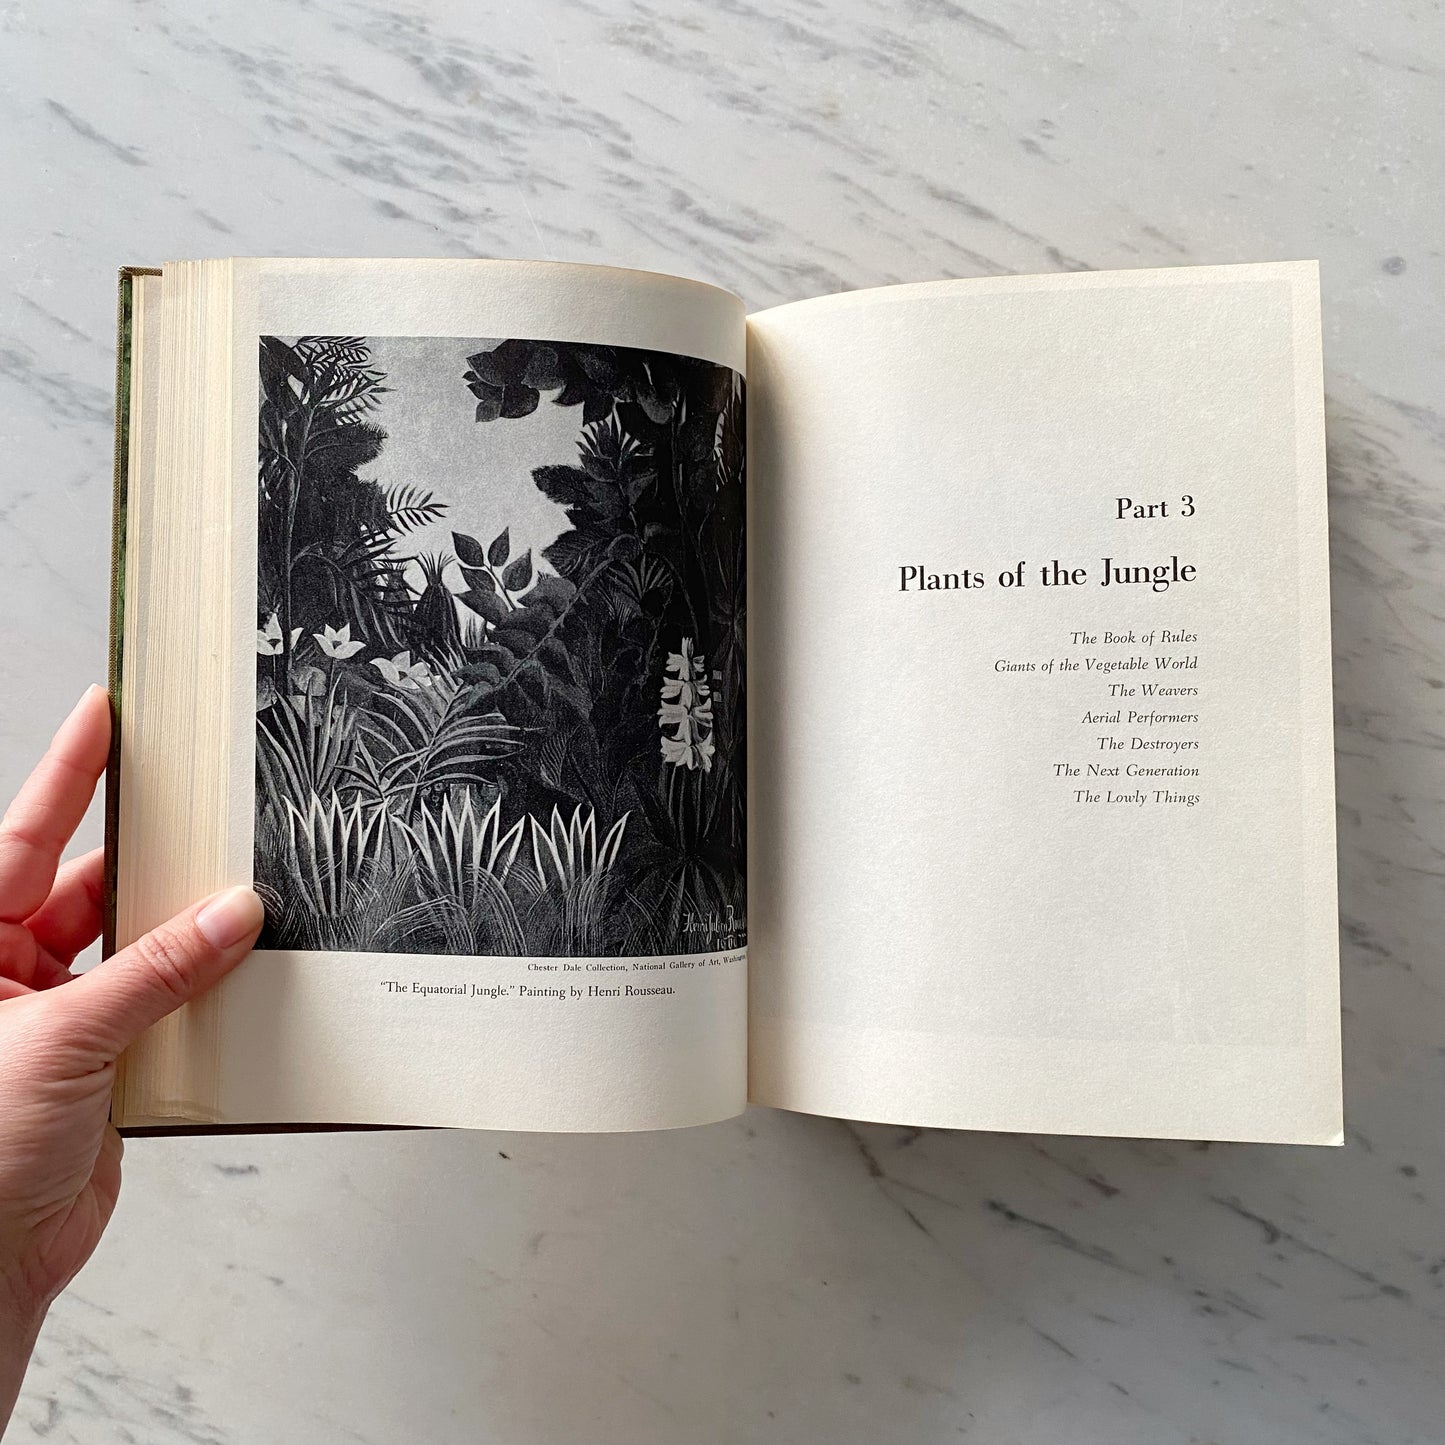 Book: Book of Great Jungles (1965)